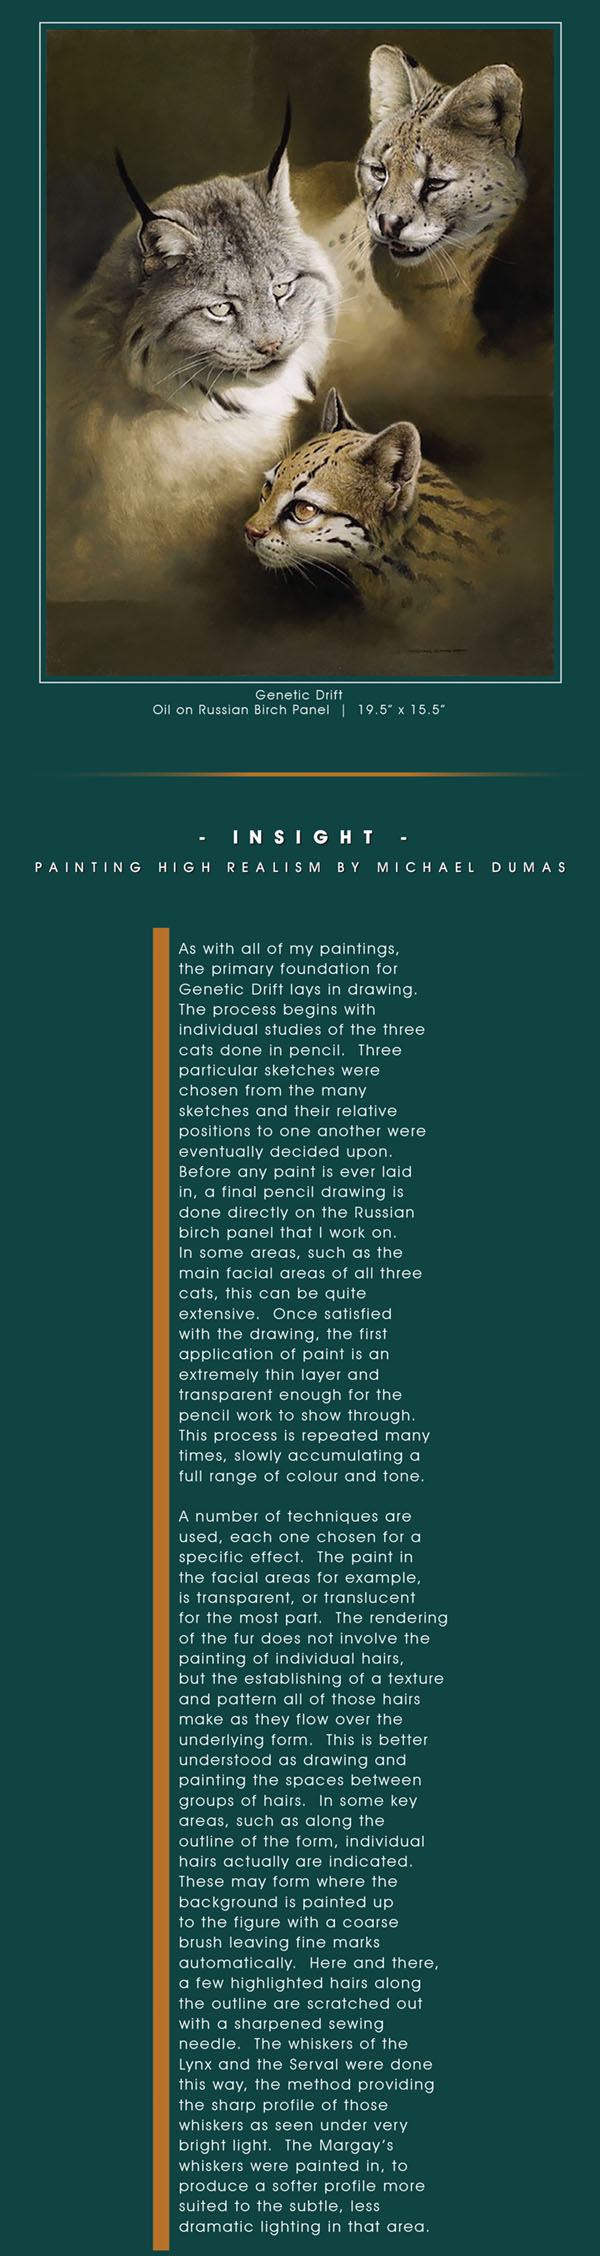 Michael Dumas - Master Realist